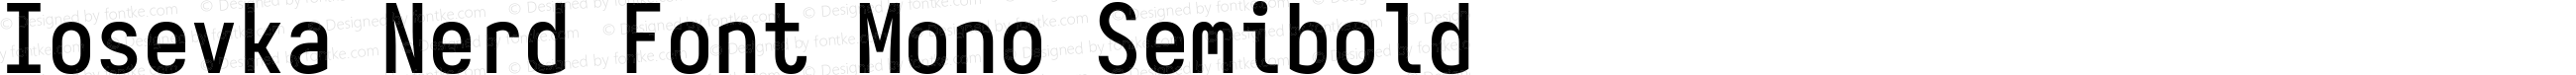 Iosevka Mayukai Serif Semibold Nerd Font Complete Mono